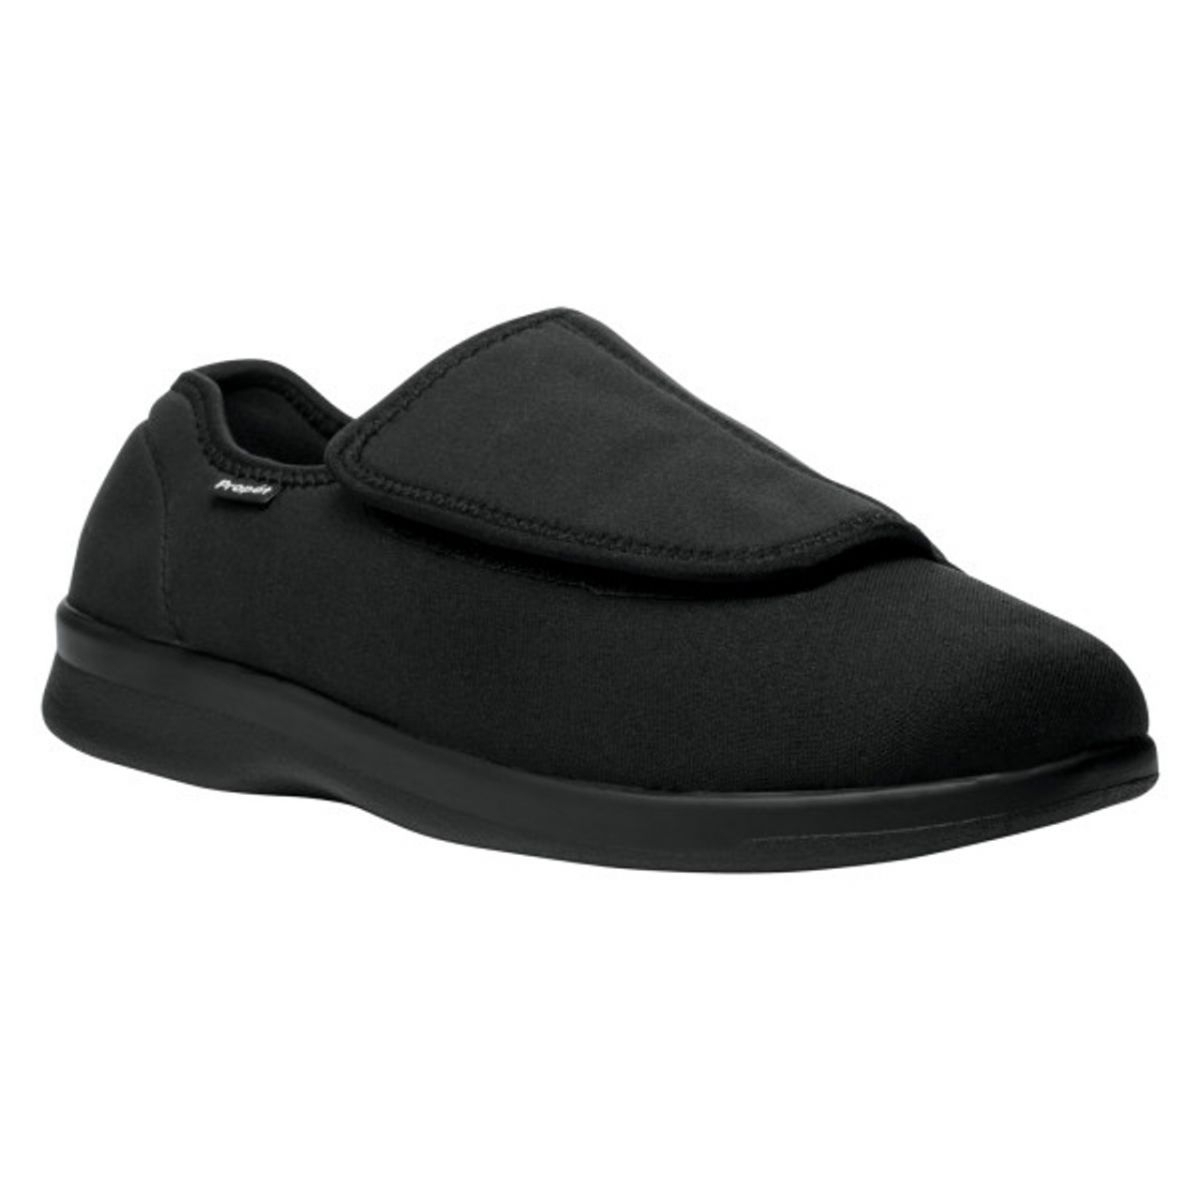 Propet Men's Cush N Foot Slip-On Shoe Black - M0202B BLACK - BLACK, 7